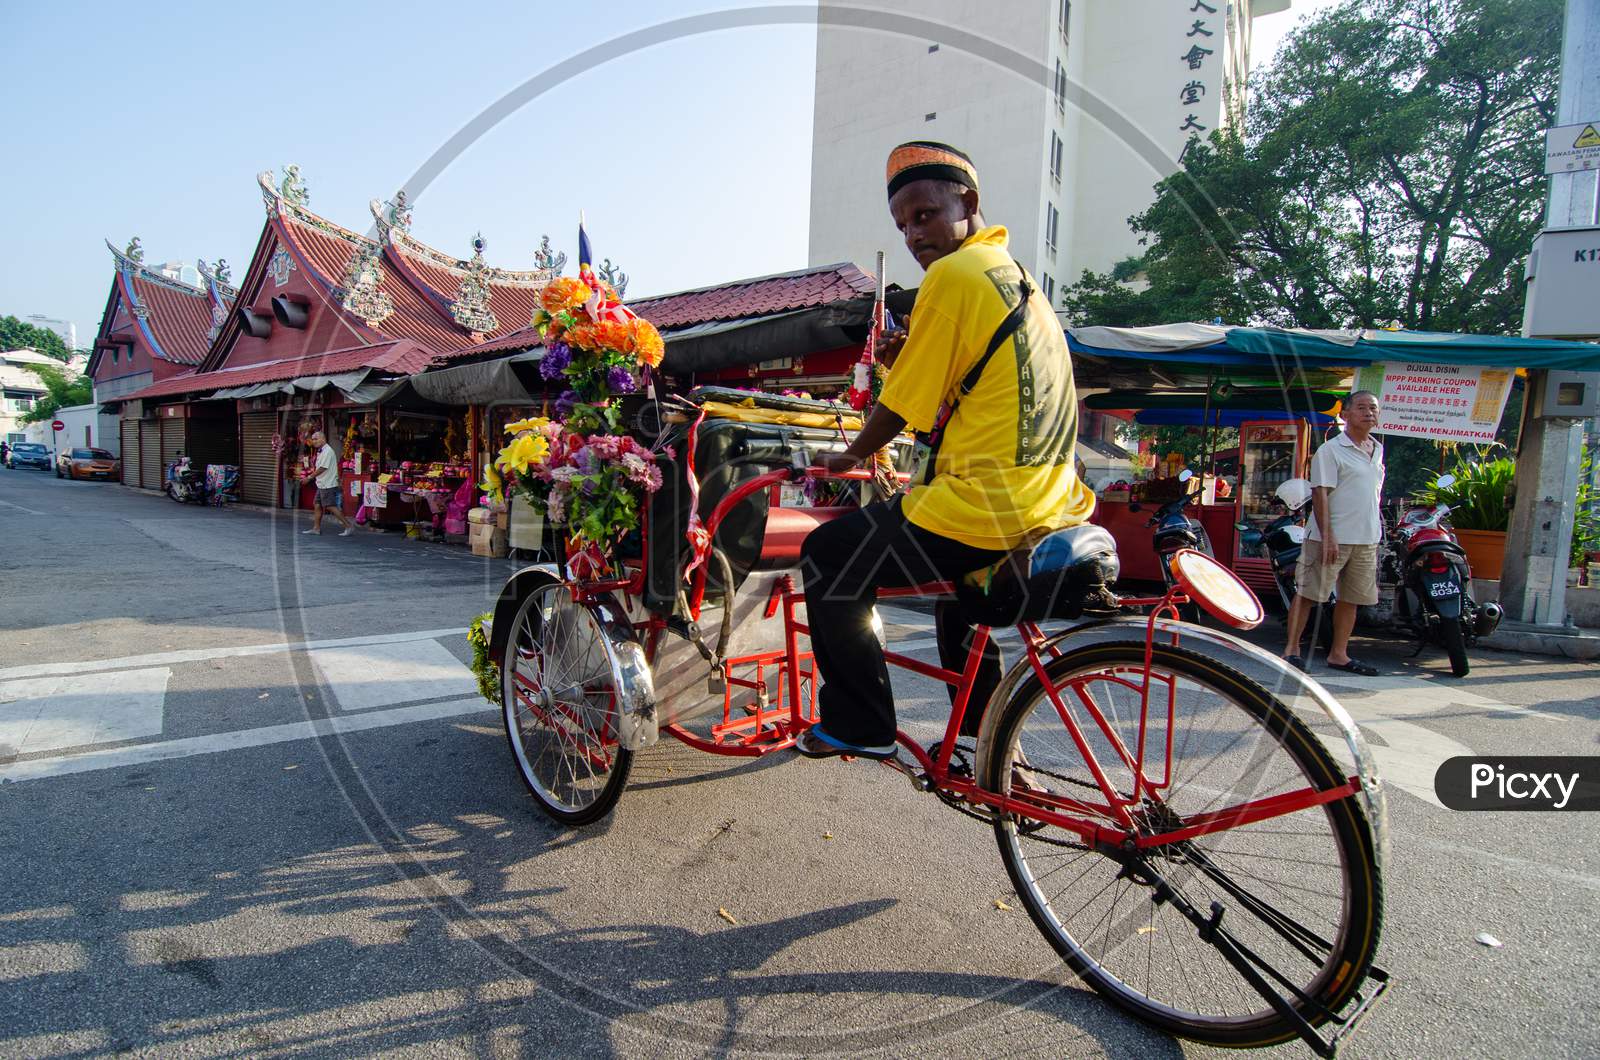 Rickshaw Driver At The Street Near The Goddess Of Mercy Temple